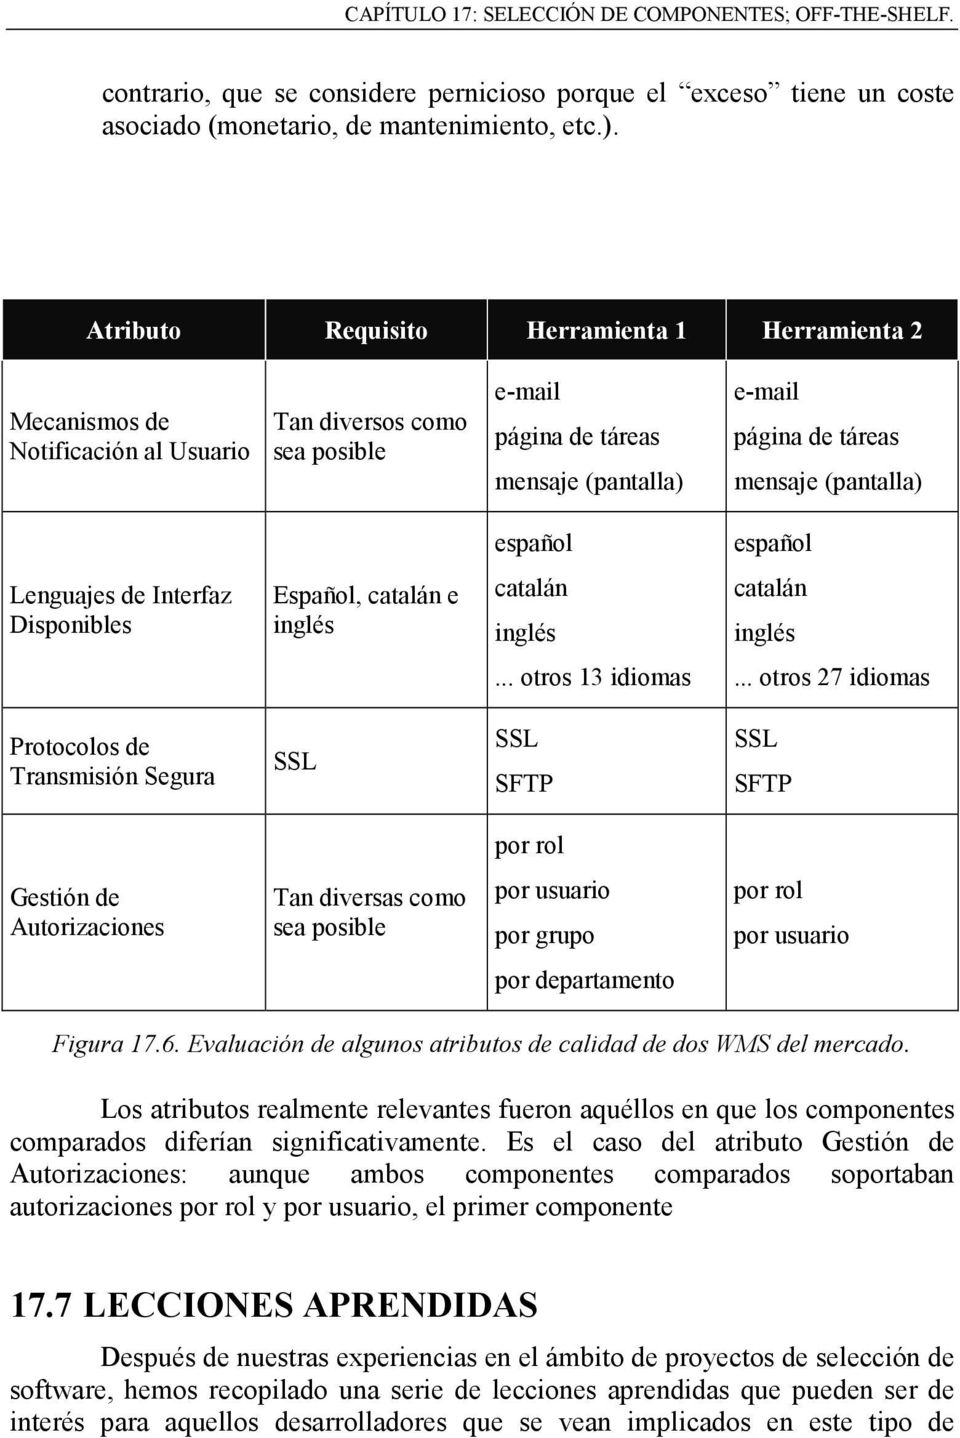 (pantalla) español español Lenguajes de Interfaz Disponibles Español, catalán e inglés catalán inglés catalán inglés... otros 13 idiomas.